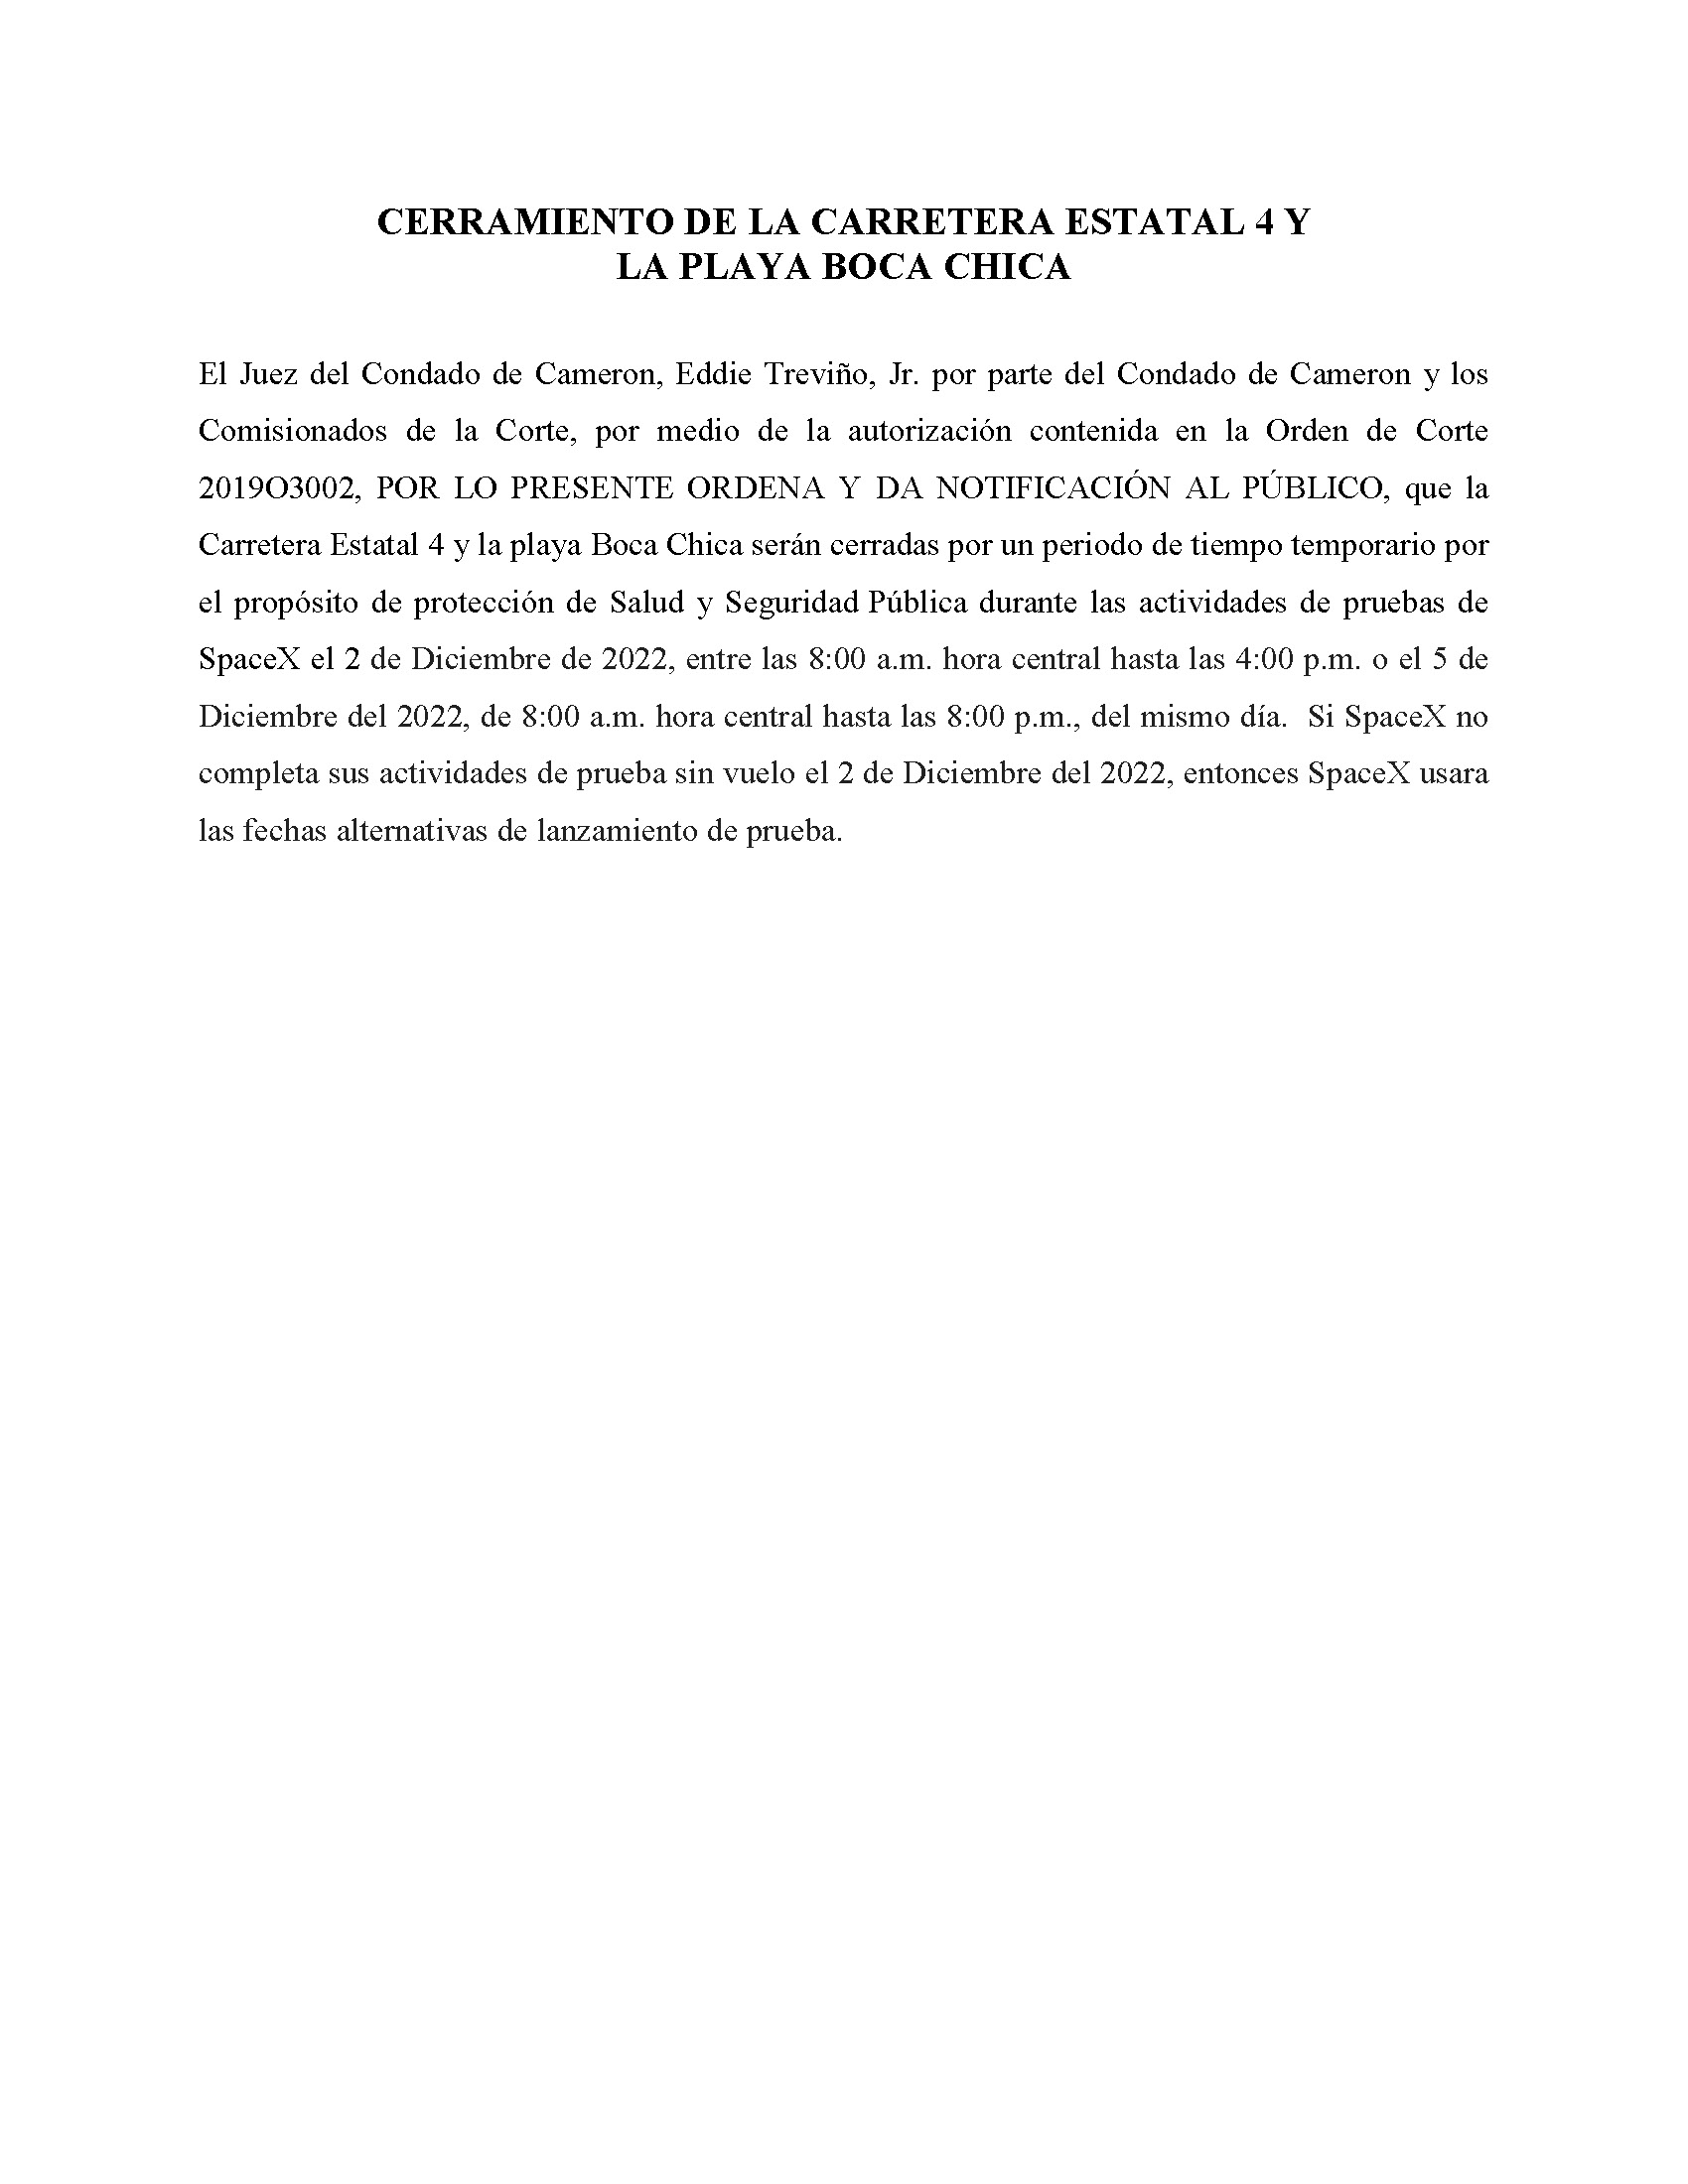 ORDER.CLOSURE OF HIGHWAY 4 Y LA PLAYA BOCA CHICA.SPANISH.12.02.2022